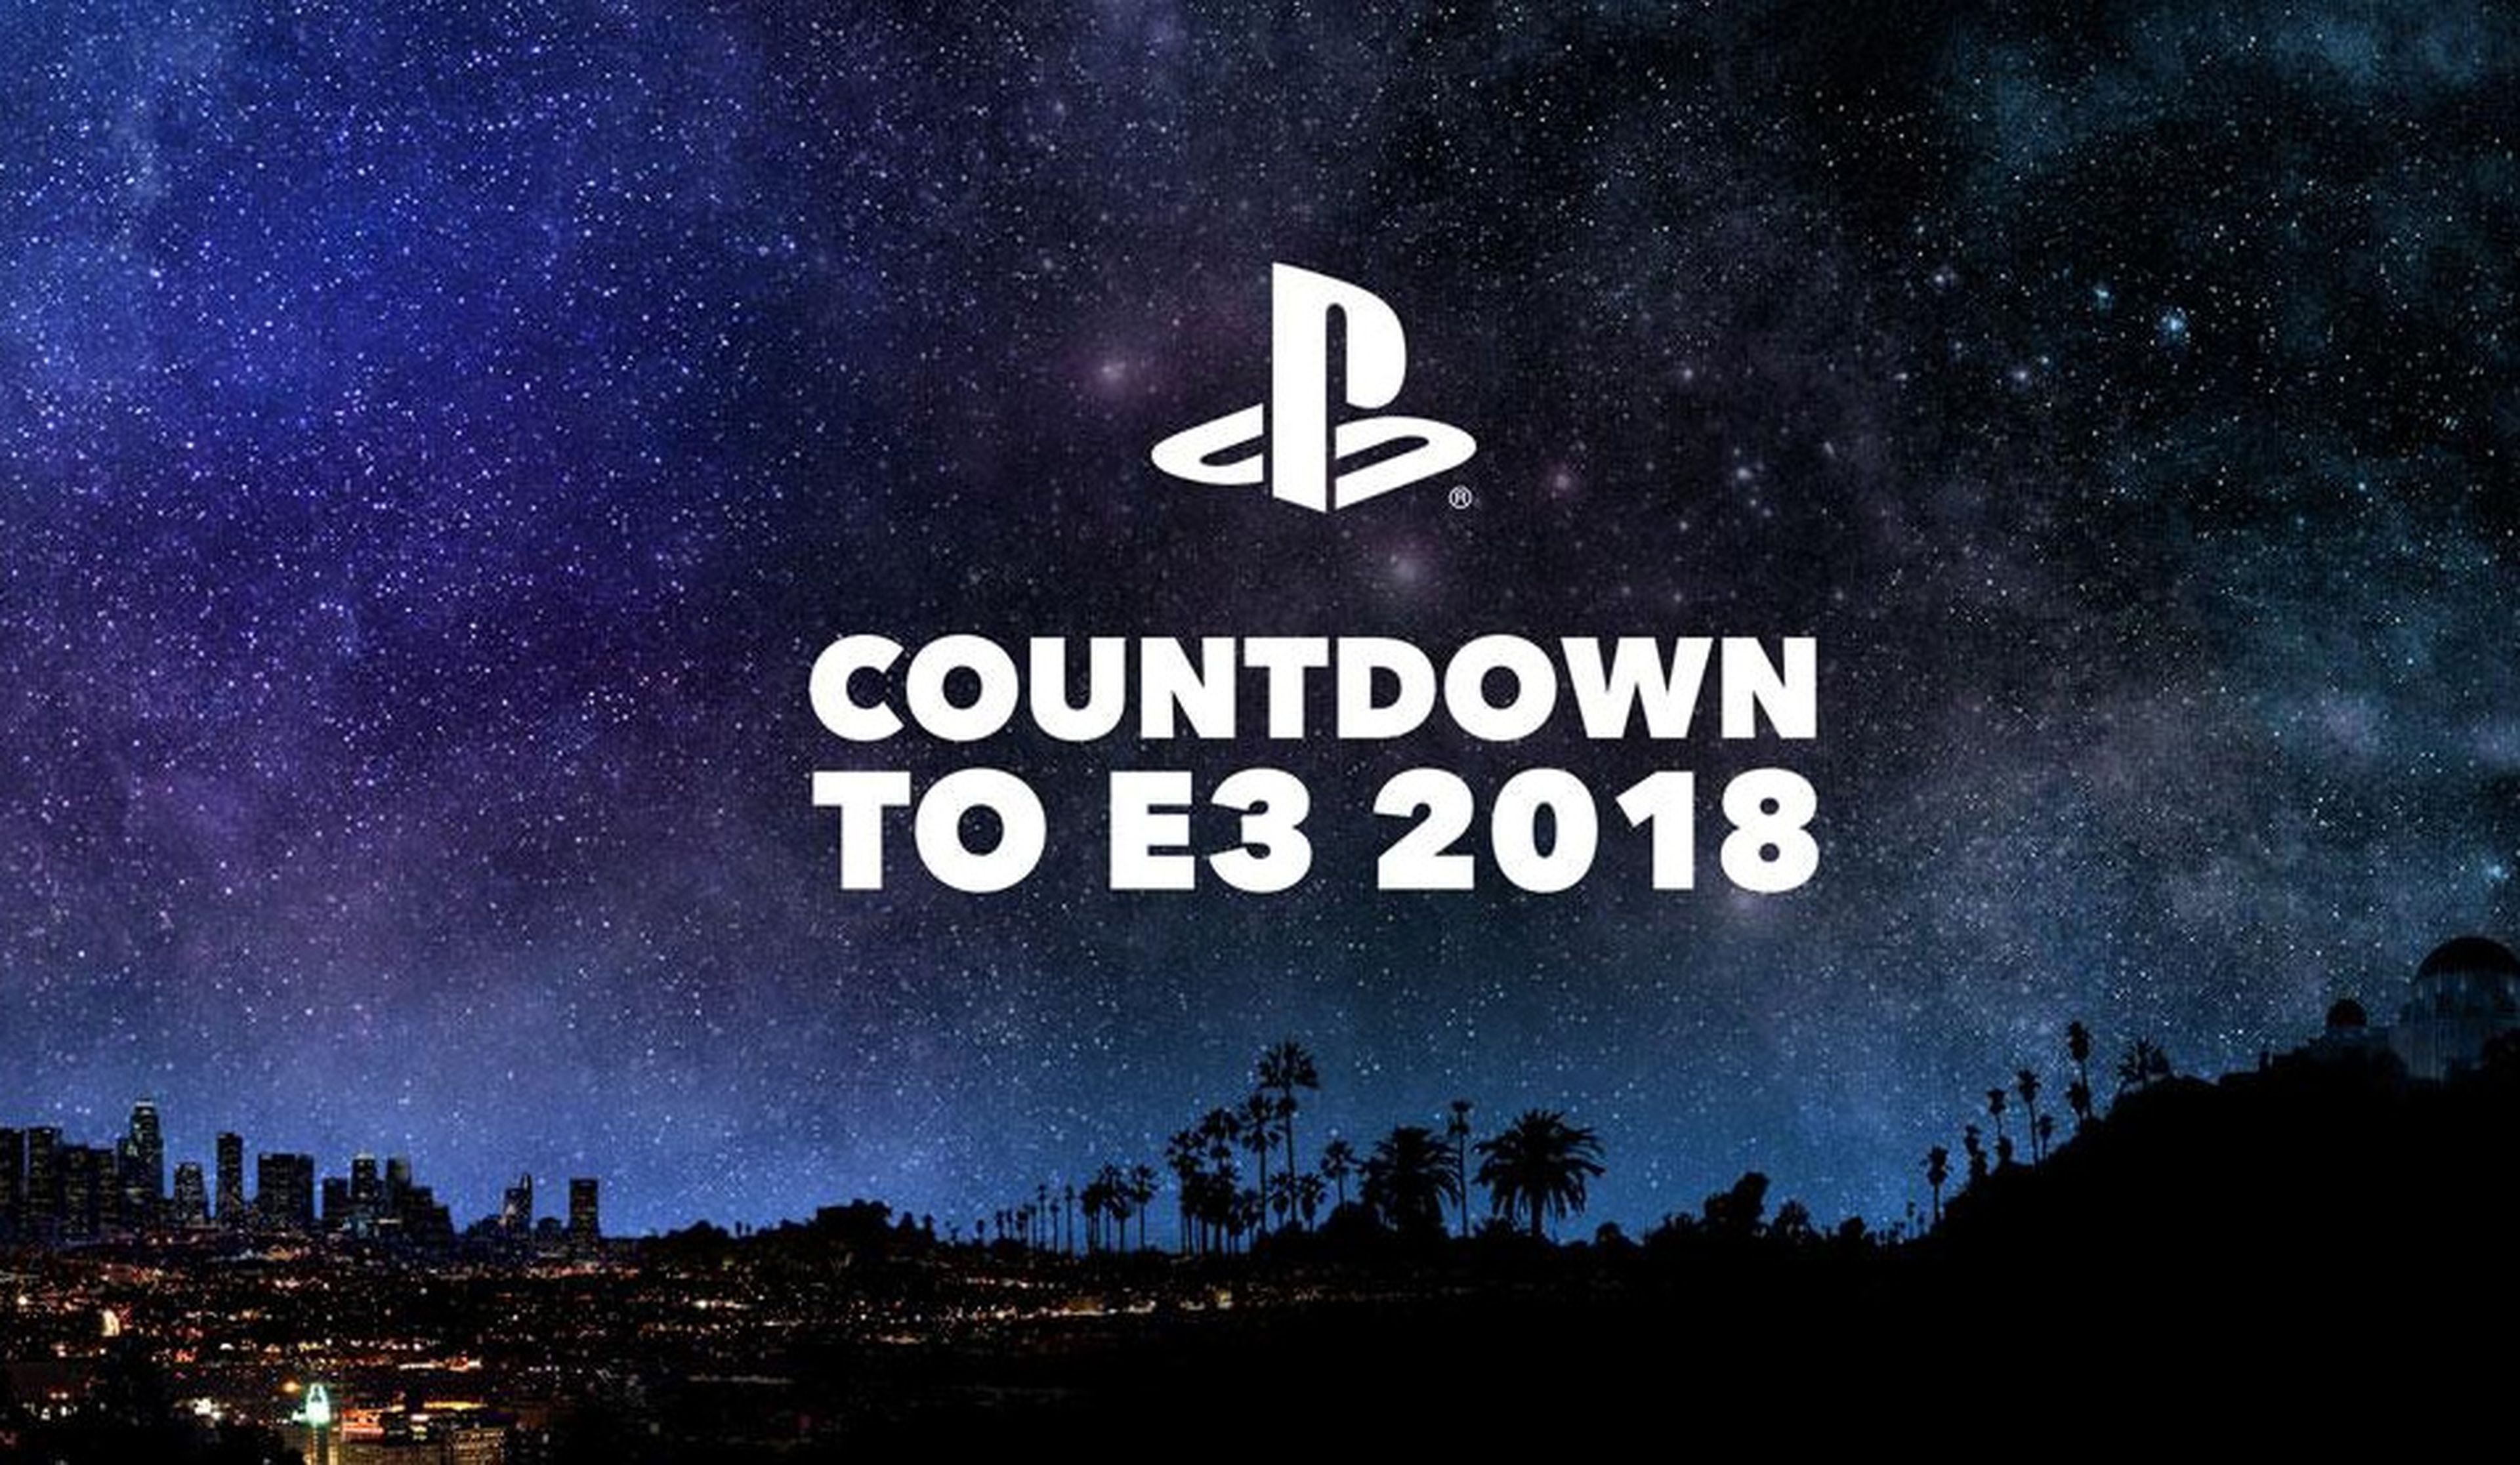 PlayStation Countdown E3 2018